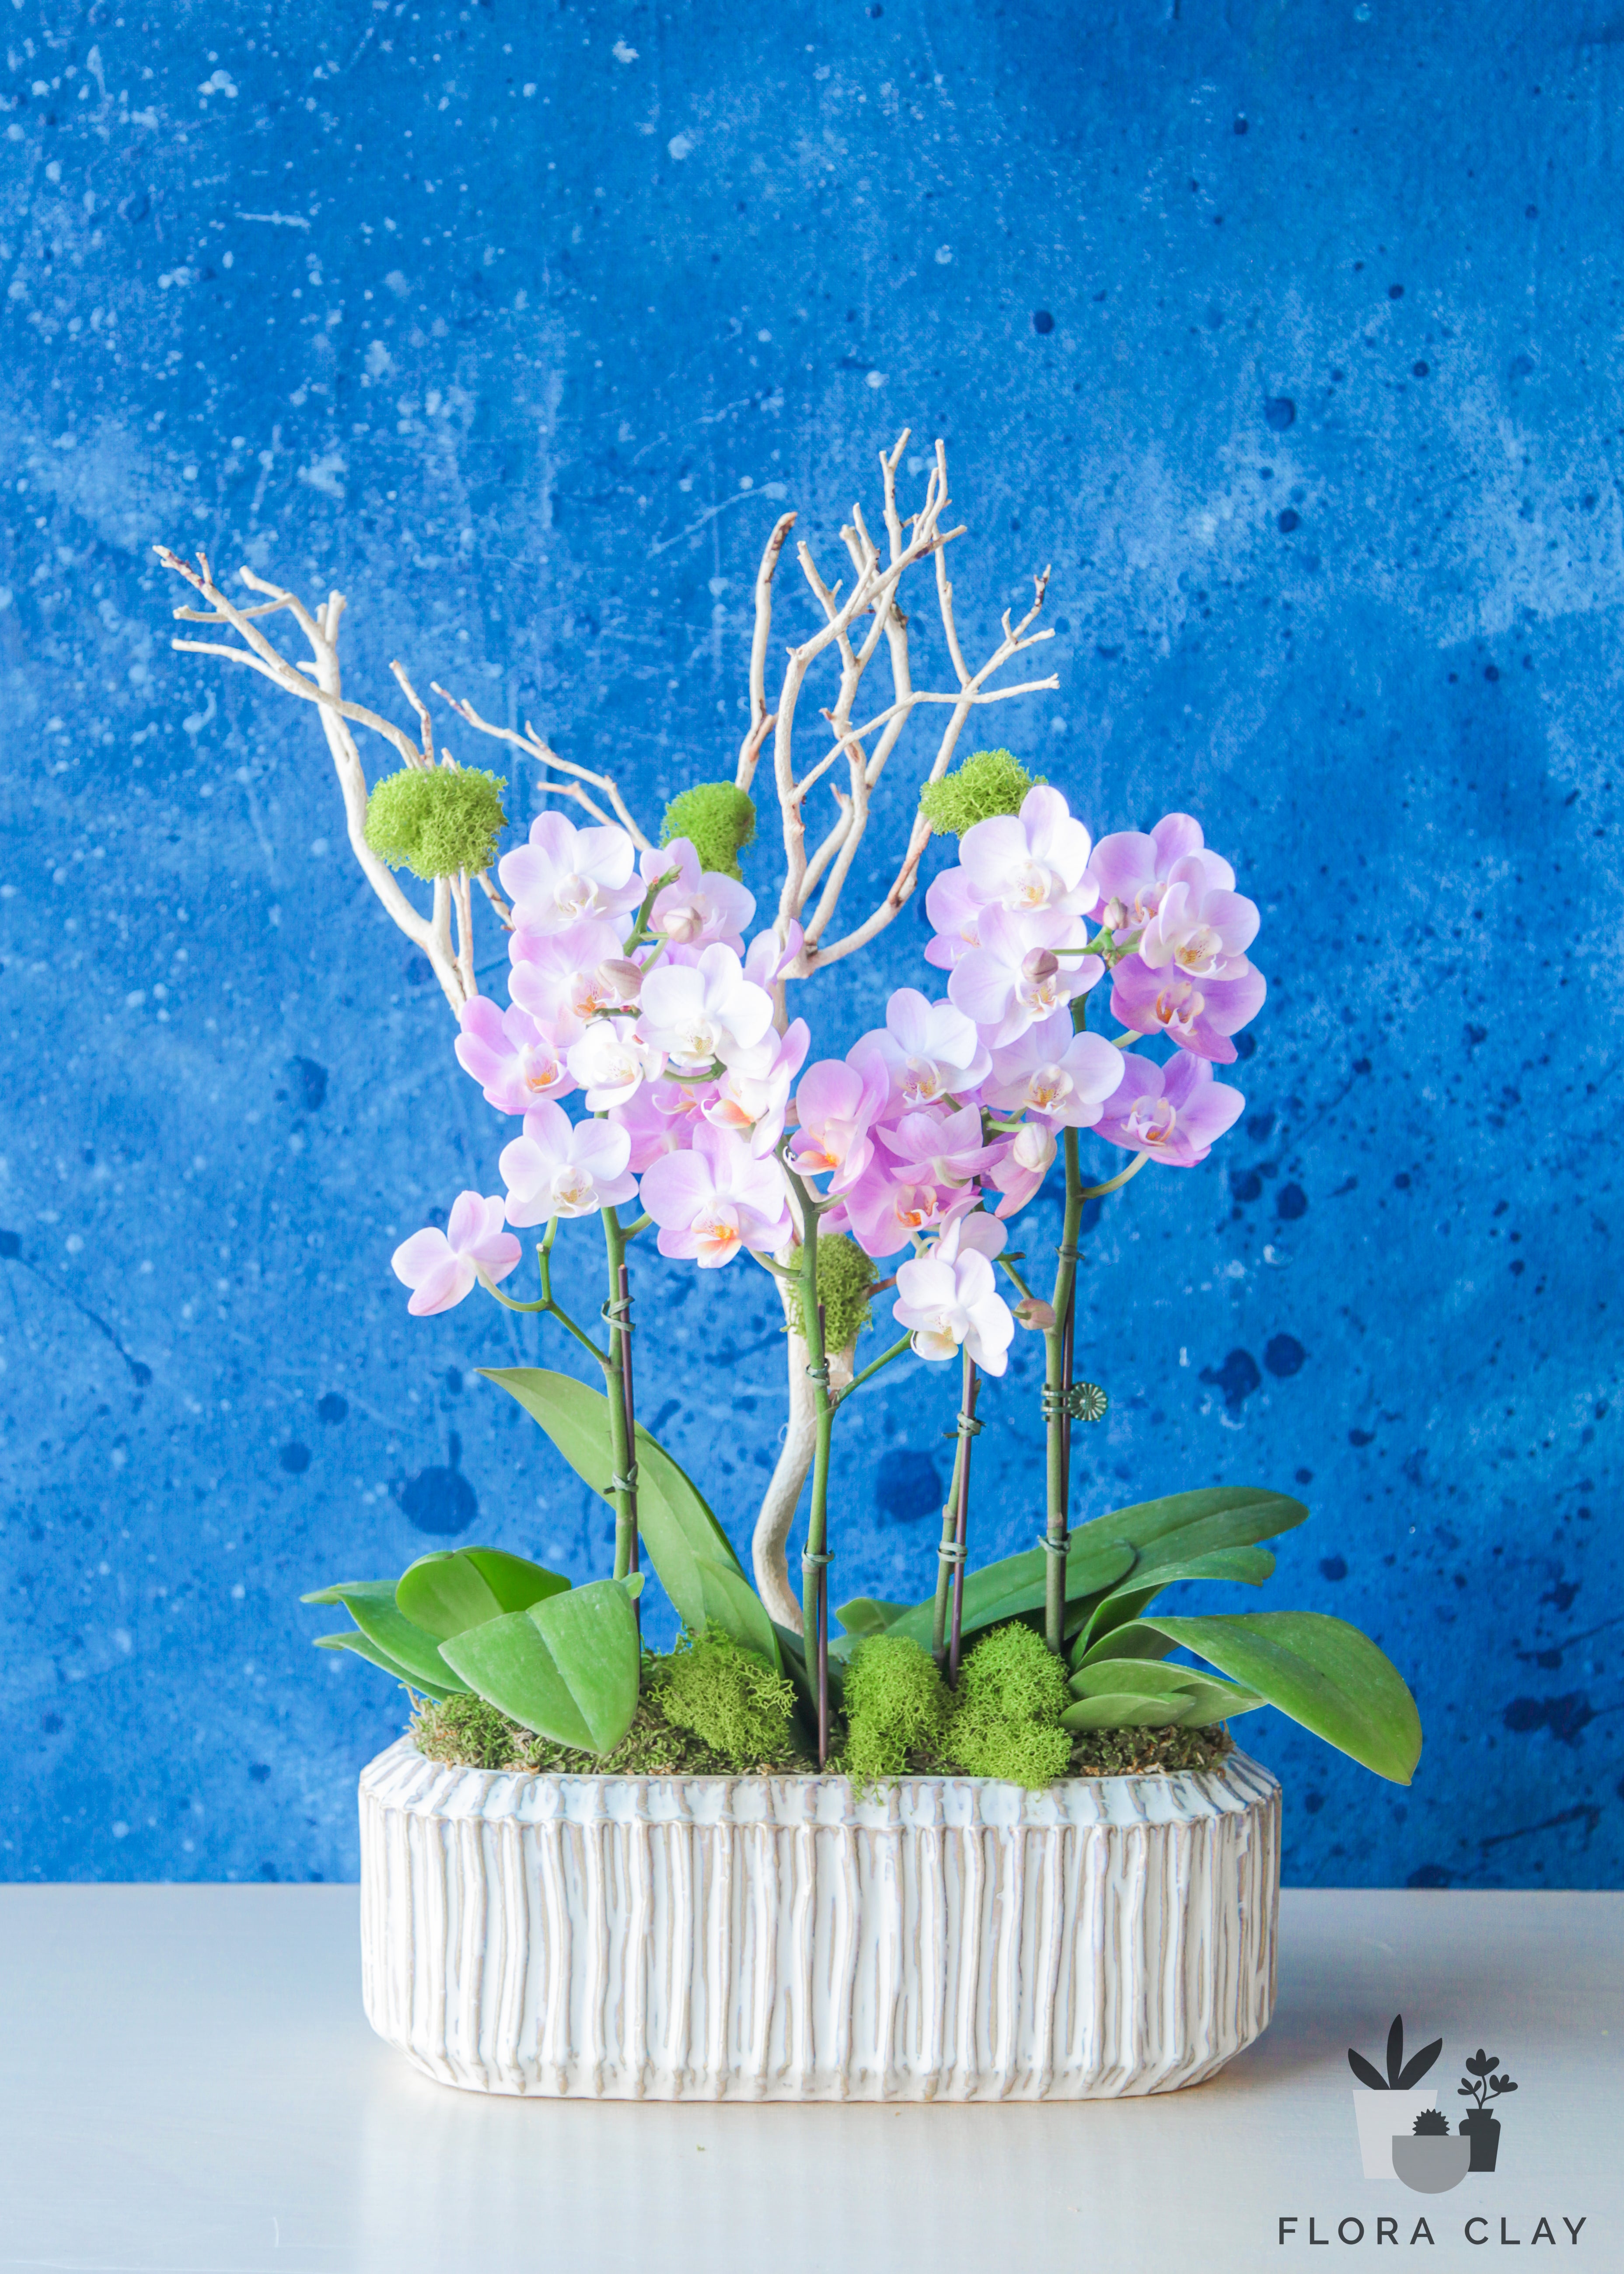 annie-orchid-arrangement-floraclay-1.jpg